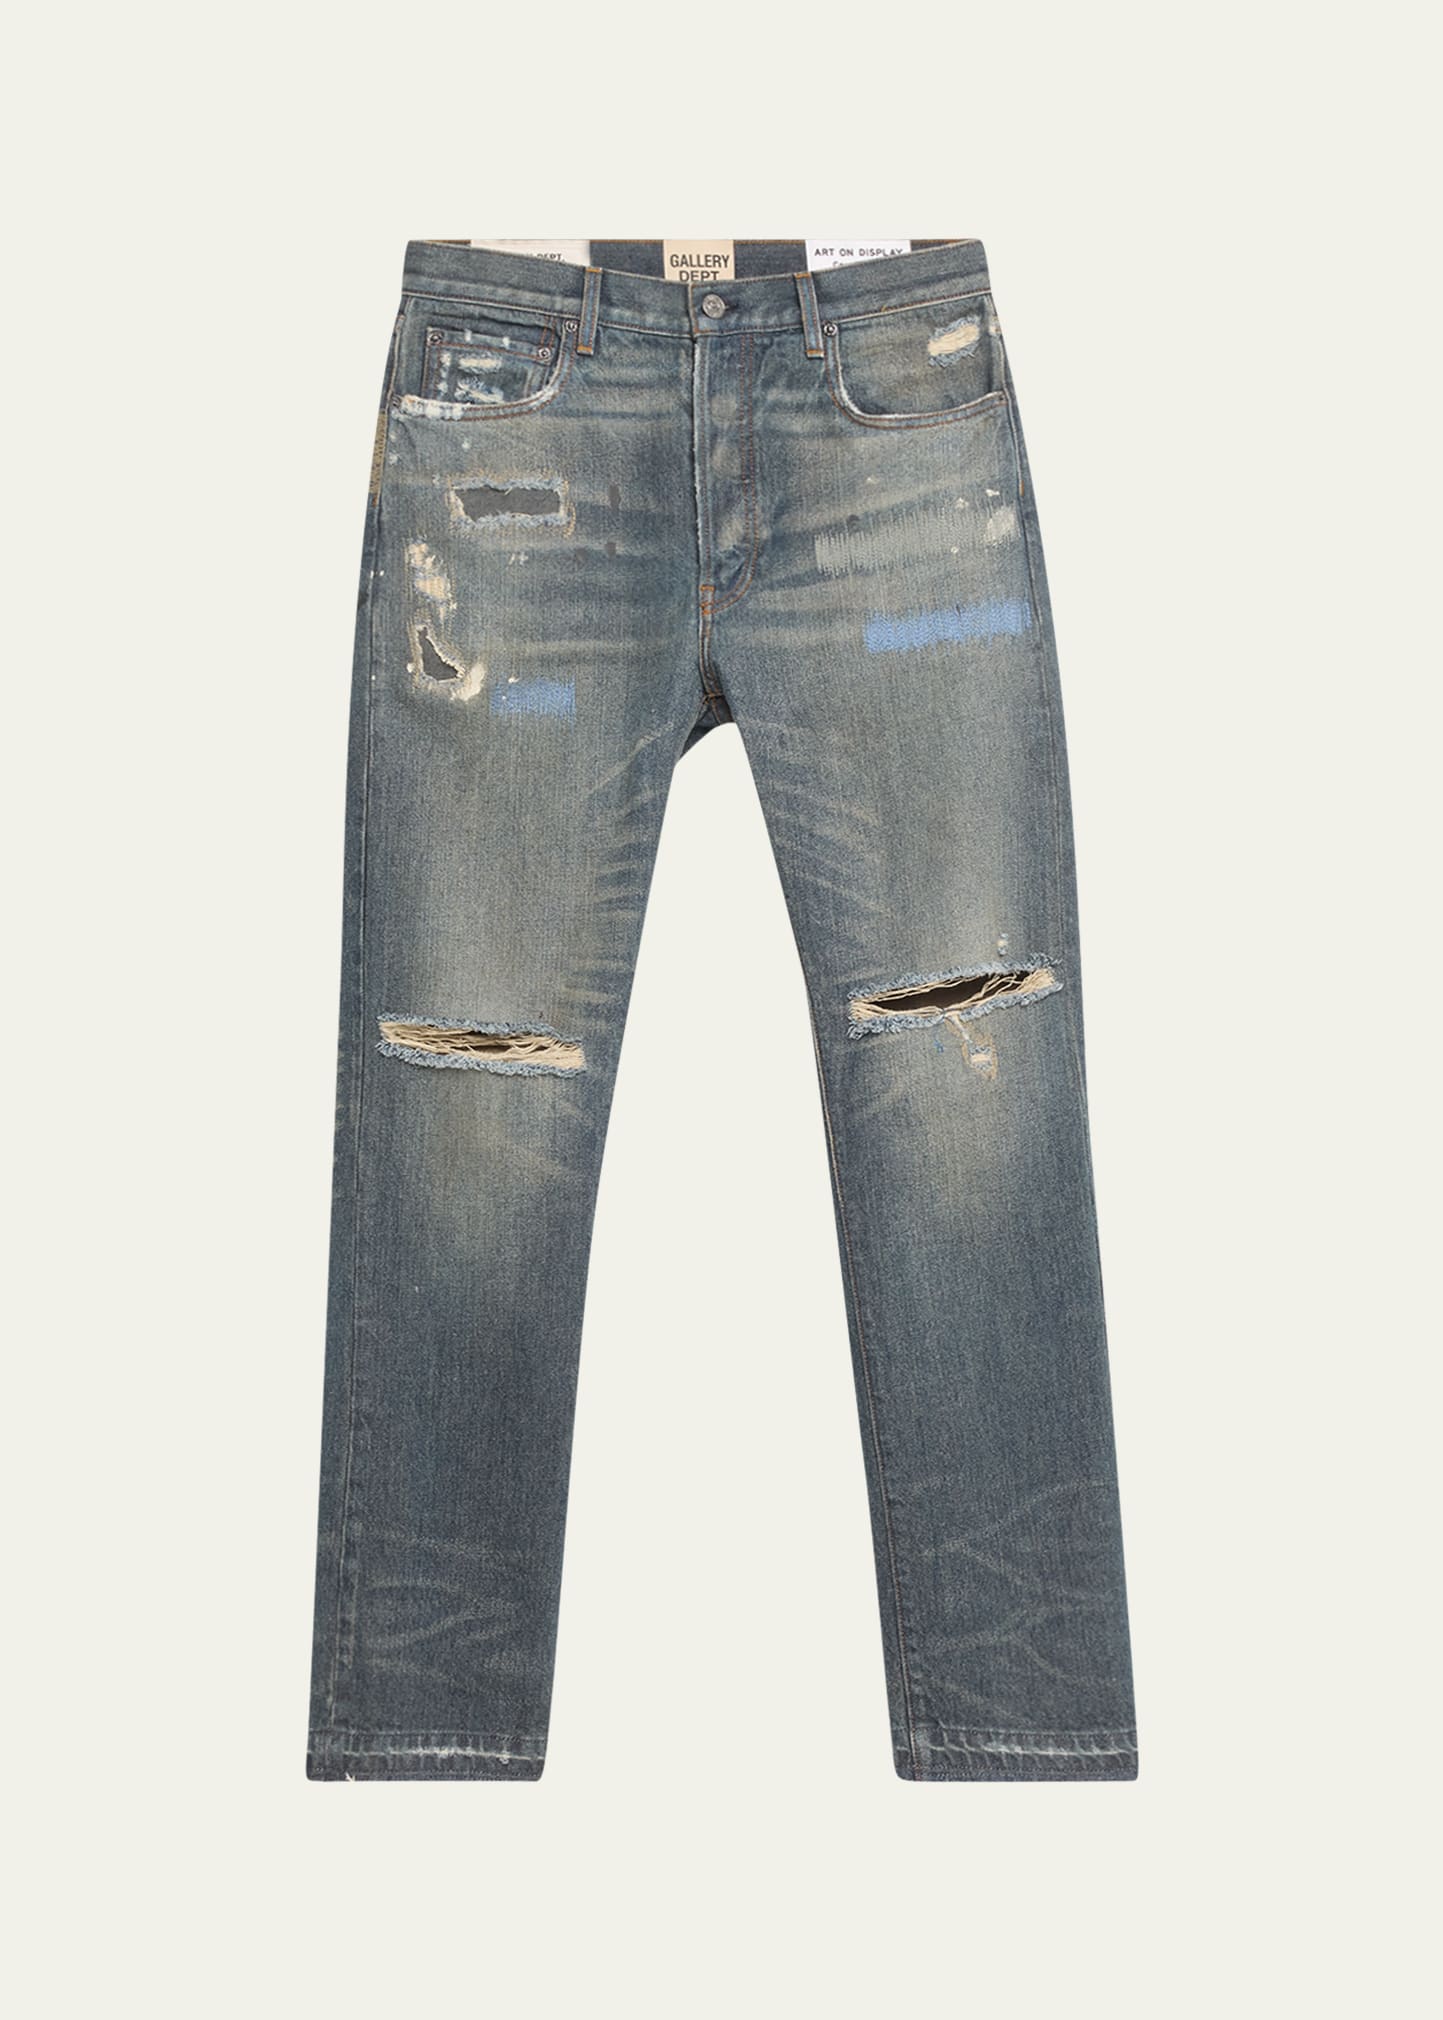 Gallery Department Men's Starr 5001 Distressed Jeans In Dark Wash